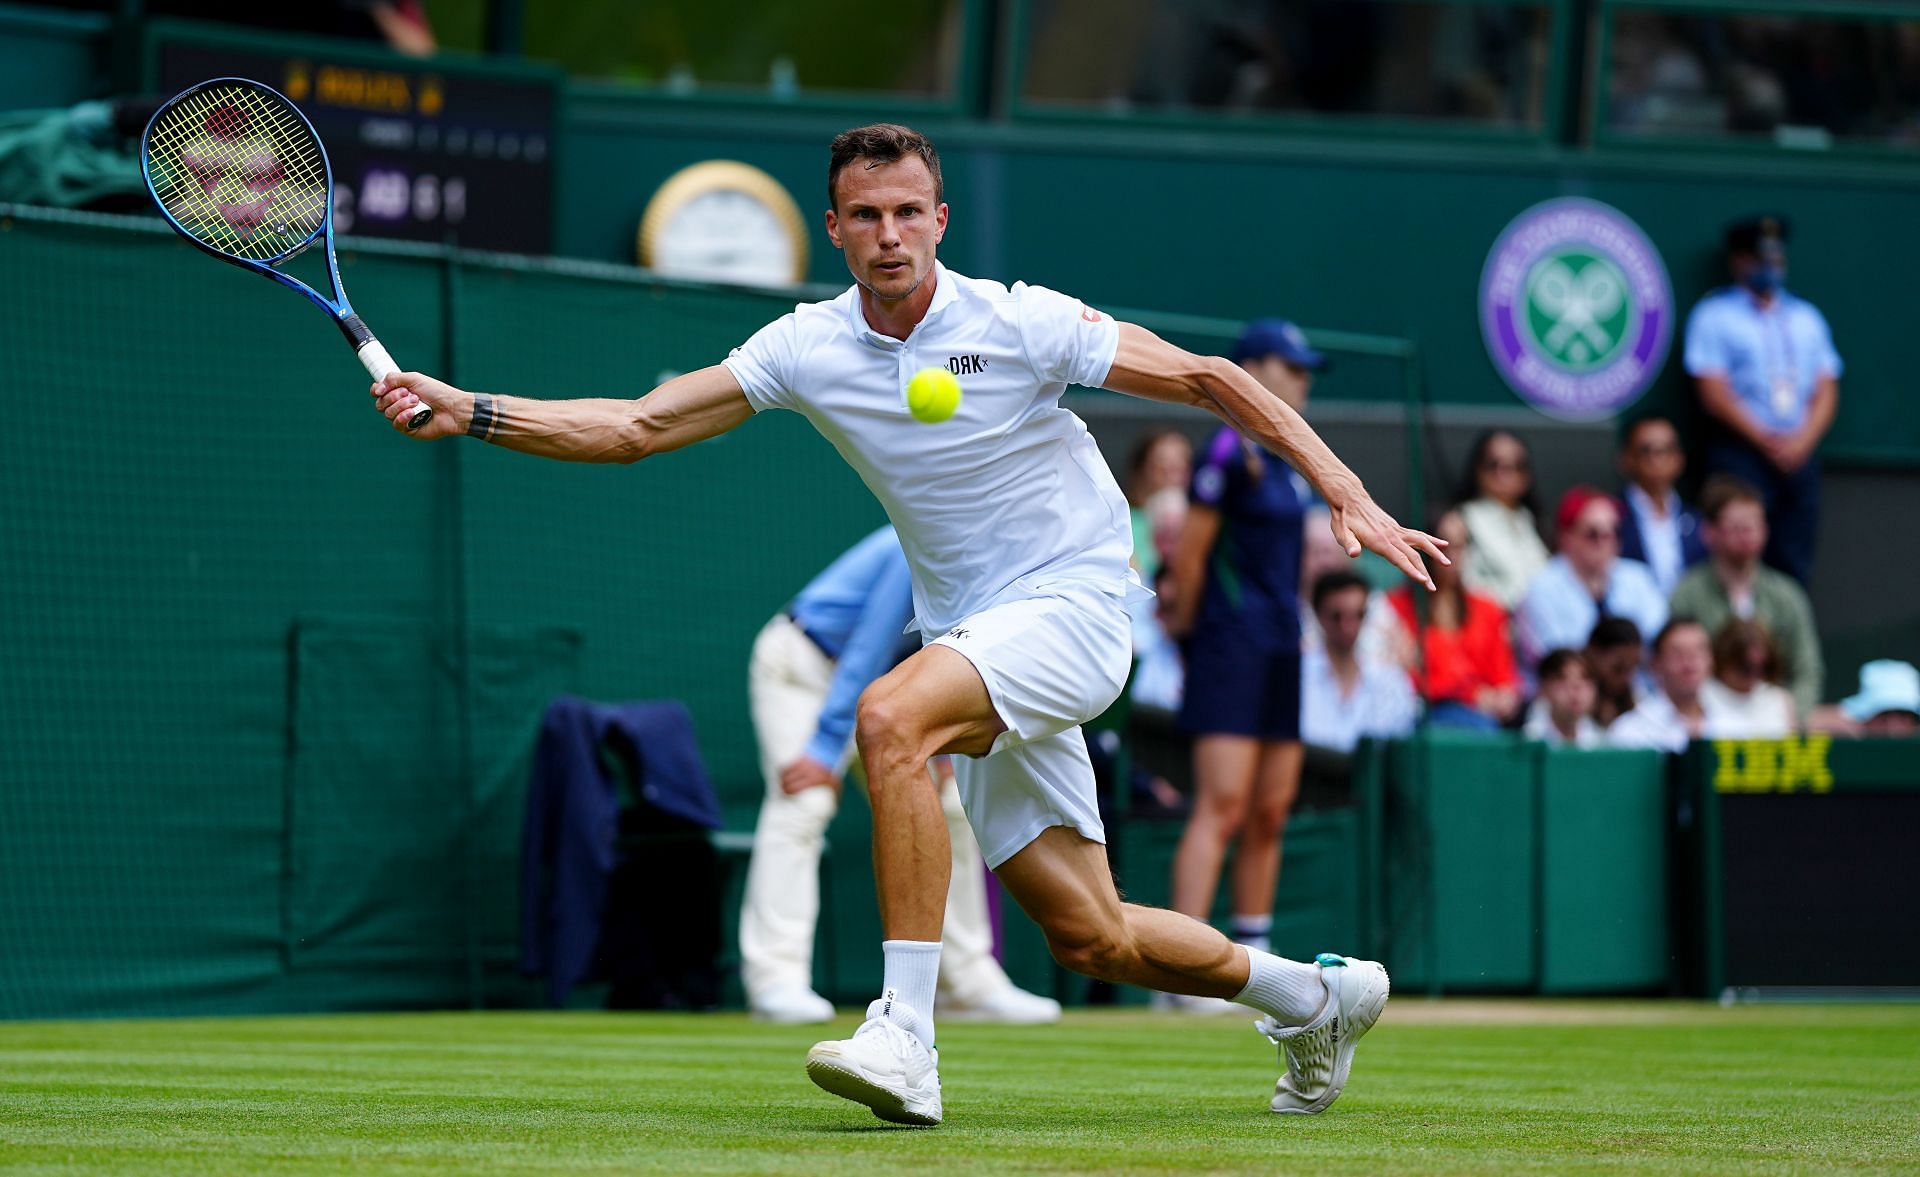 Fucsovics plays a slice at Wimbledon